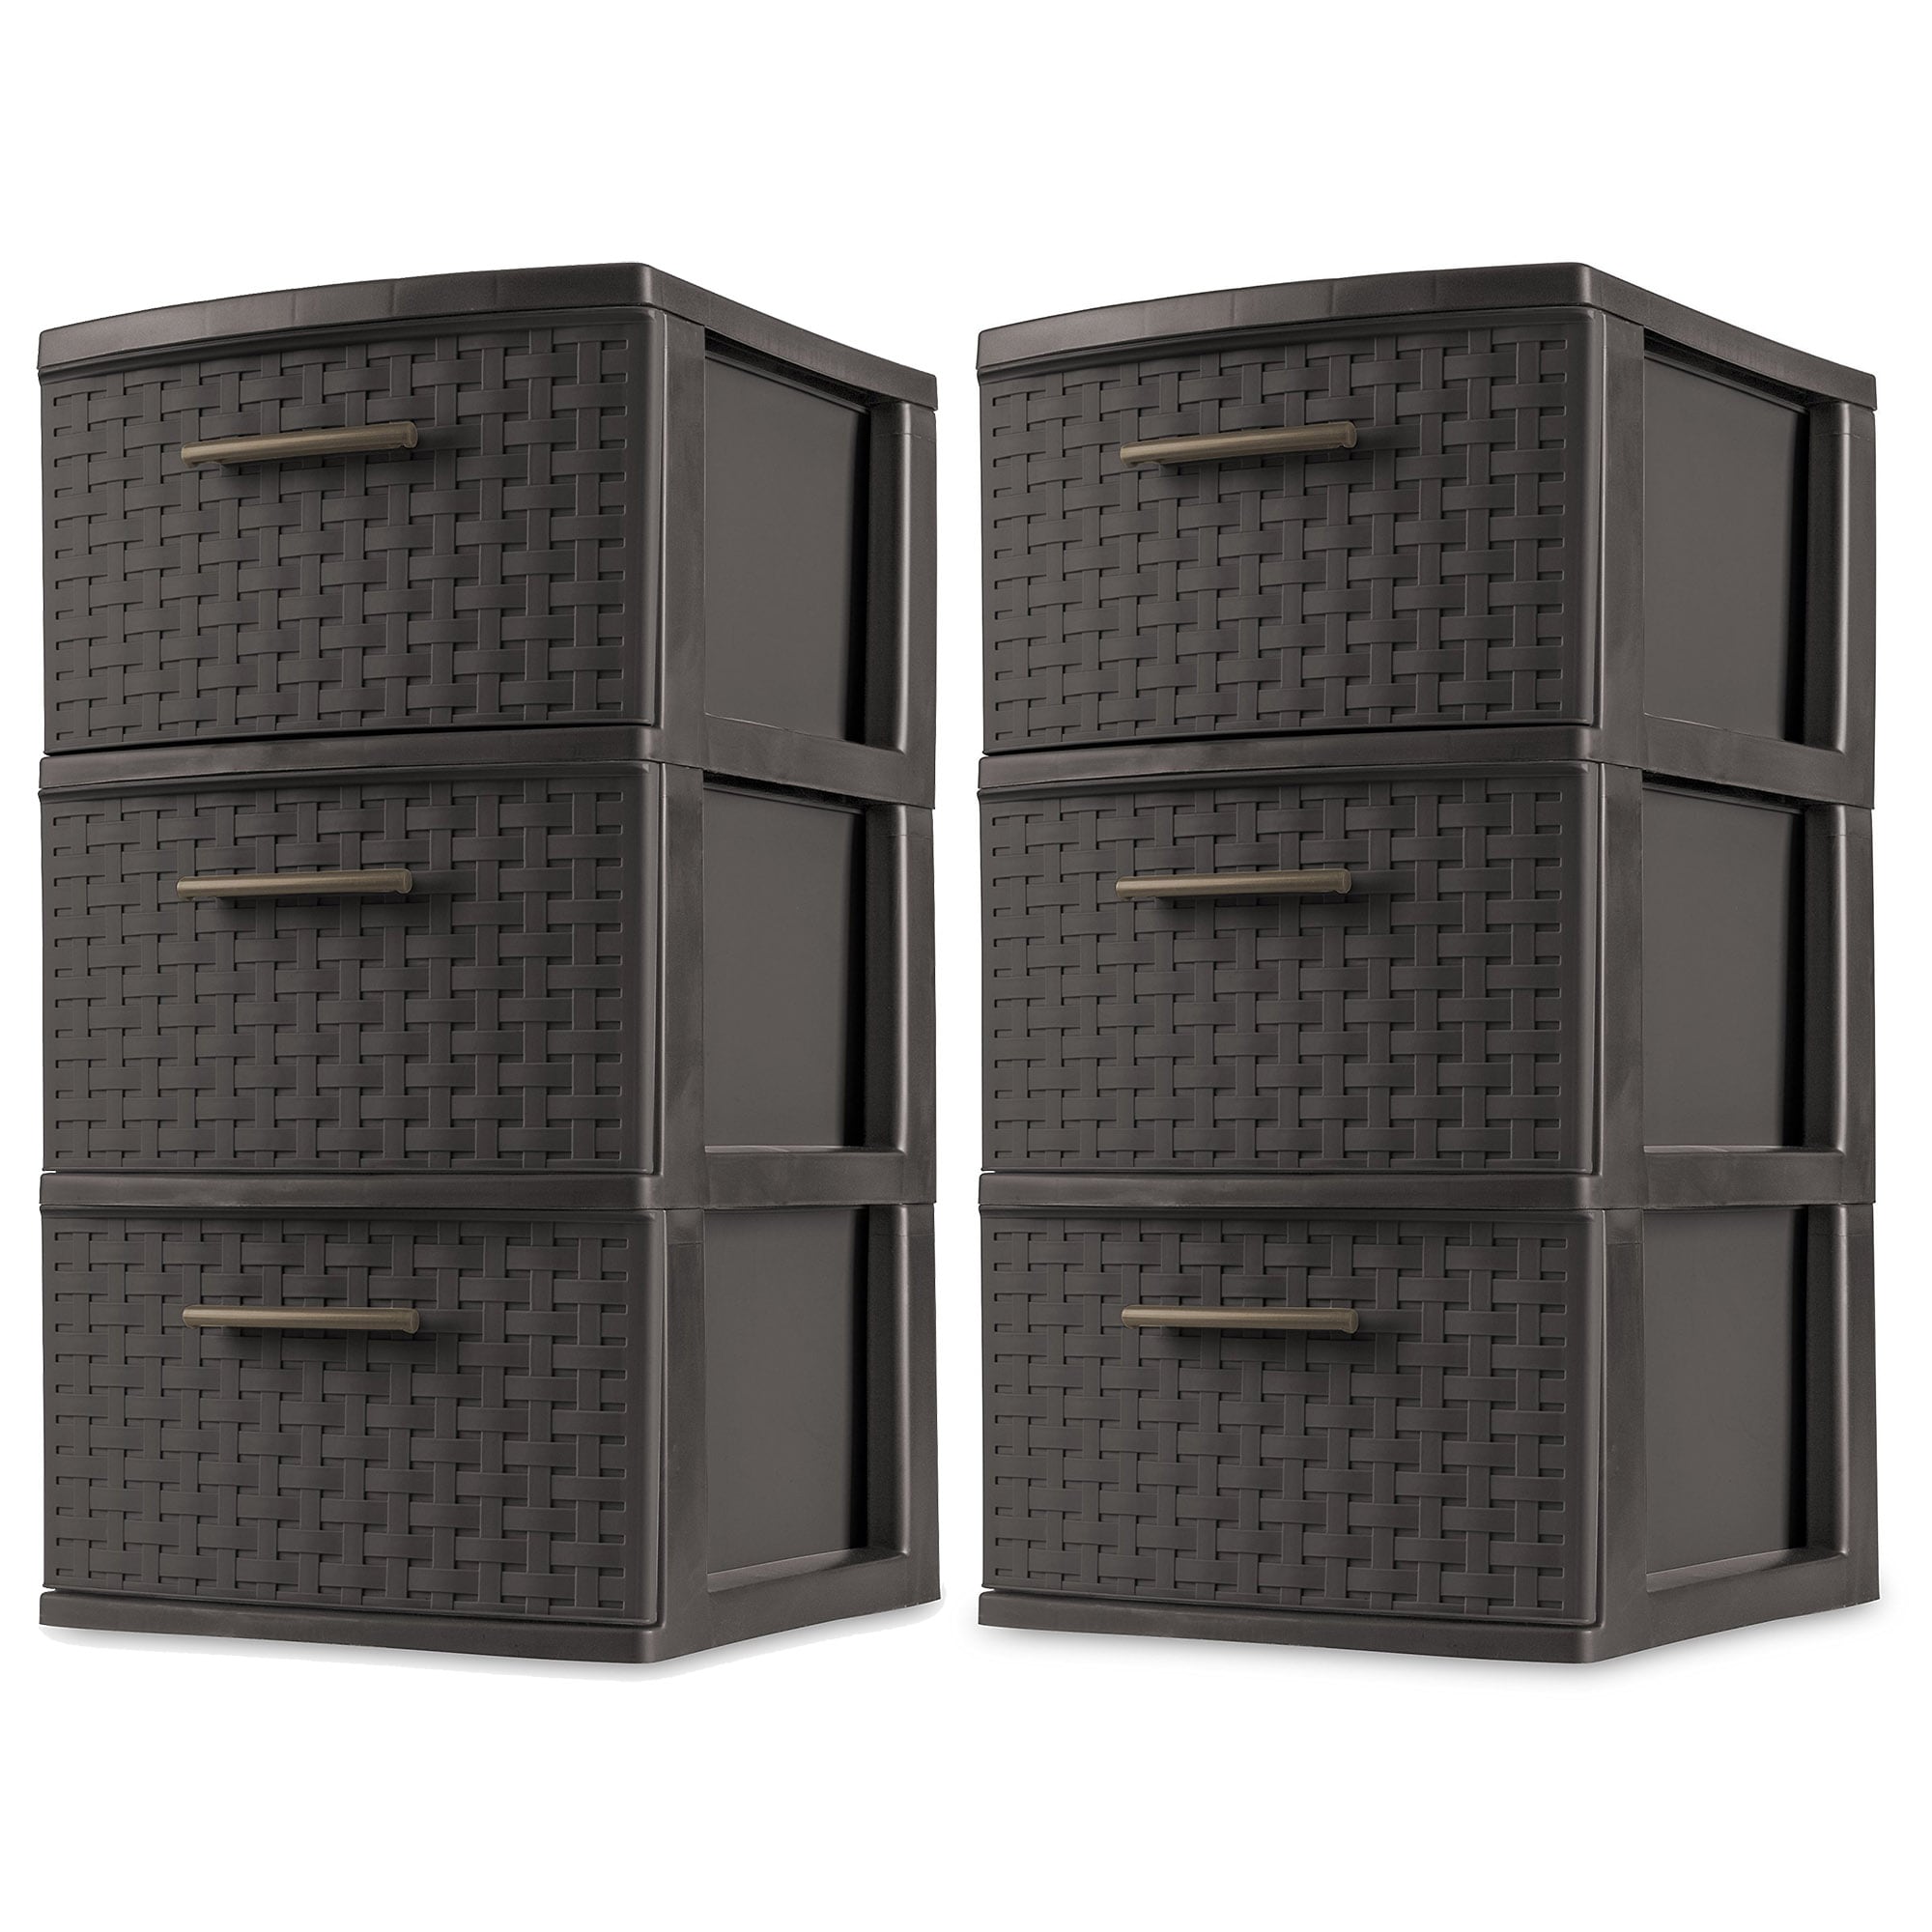 Sterilite storage drawers set of 2 - household items - by owner -  housewares sale - craigslist